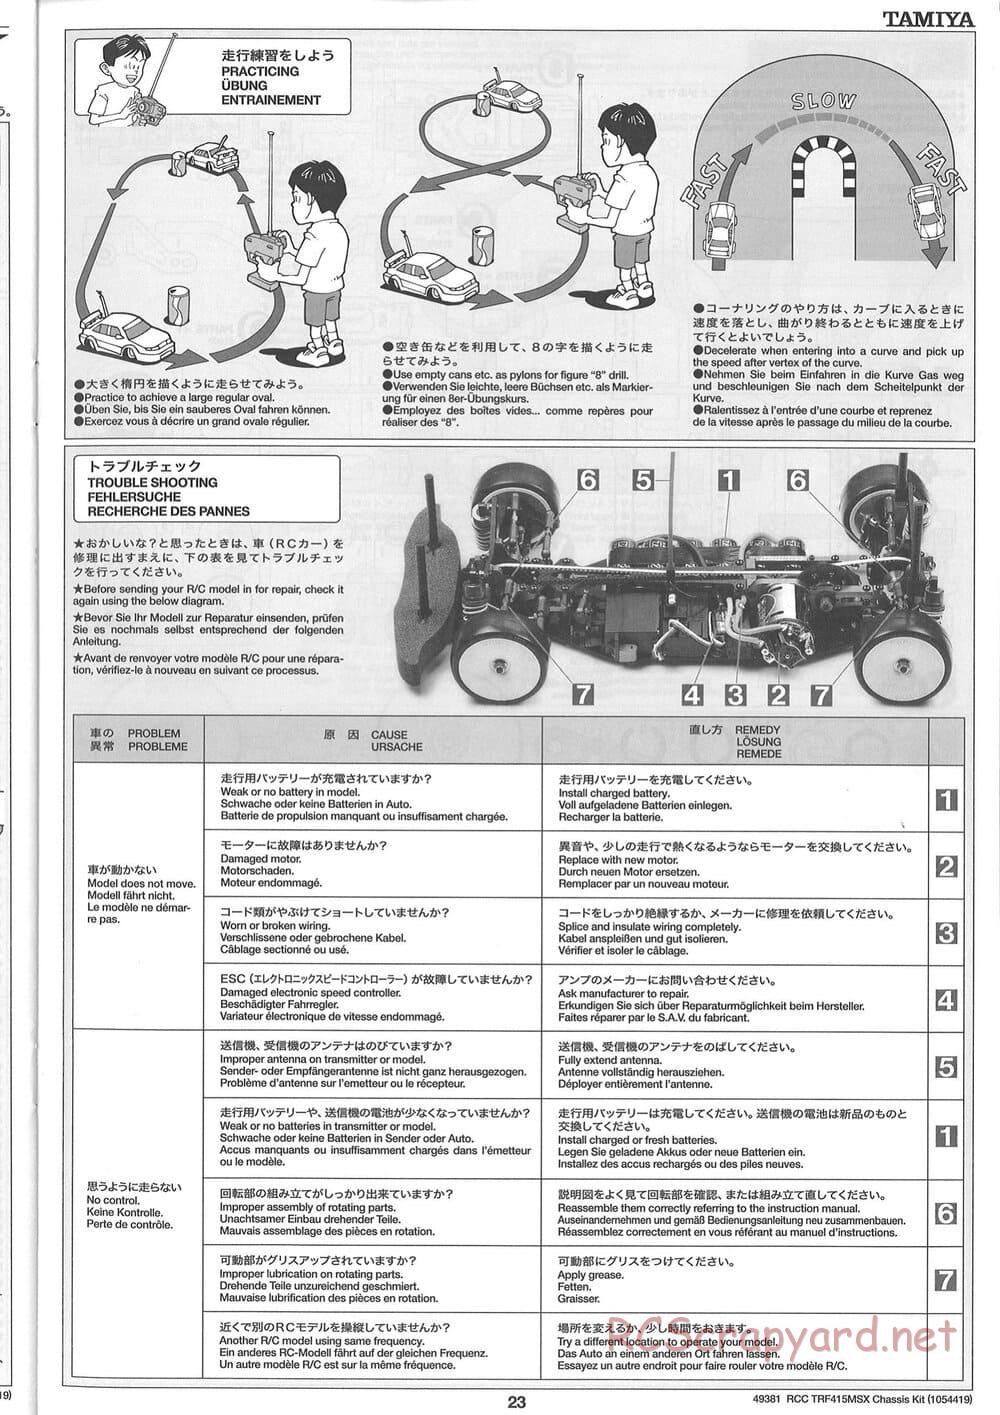 Tamiya - TRF415-MSX Chassis - Manual - Page 23